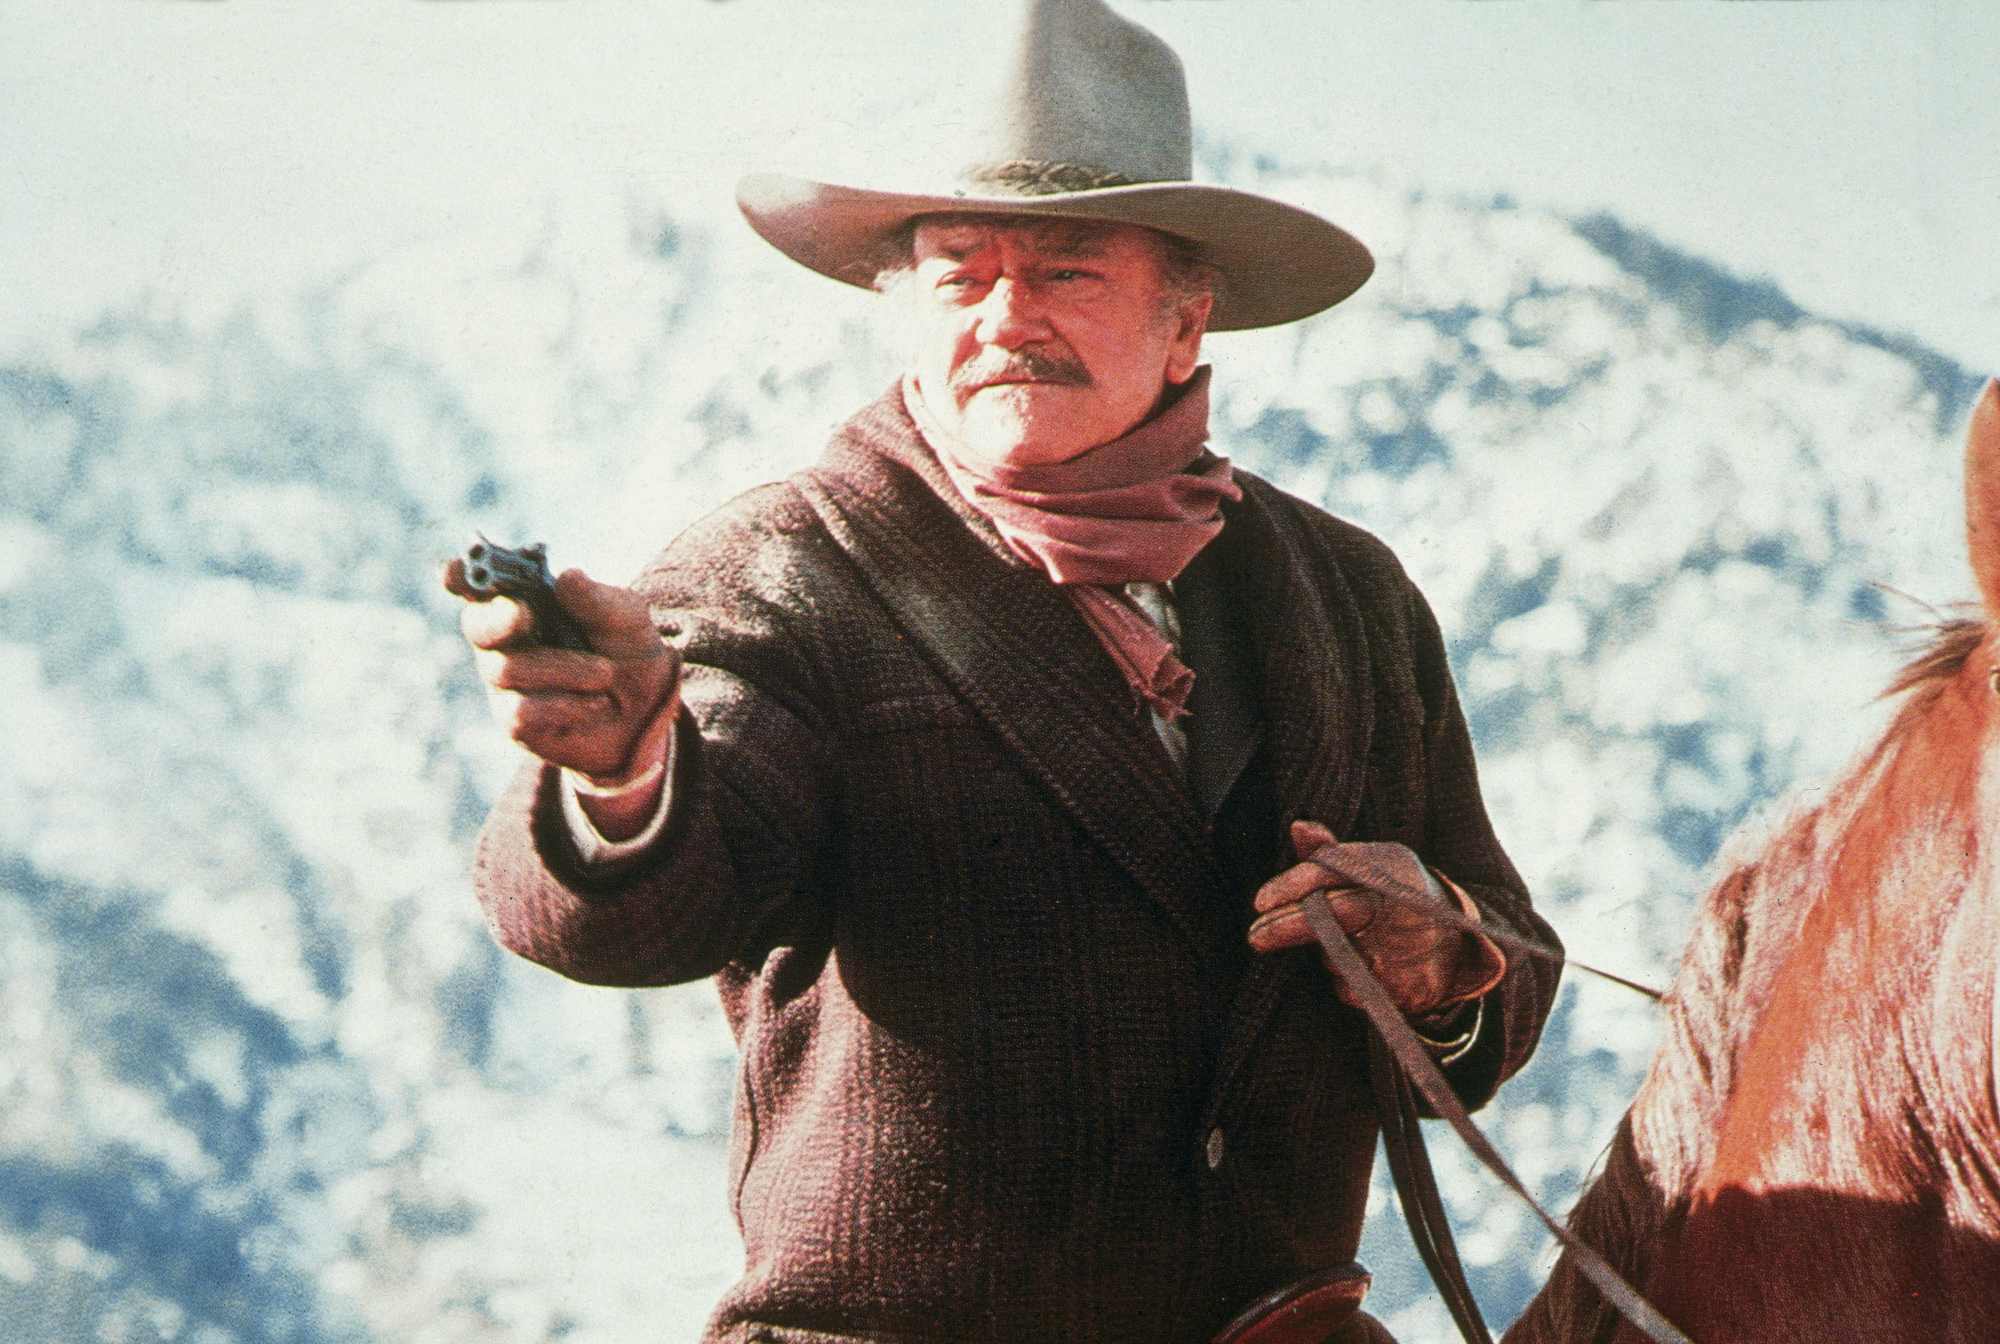 'The Shootist' John Wayne as J.B. Books holding out his pistol, while sitting on horseback.